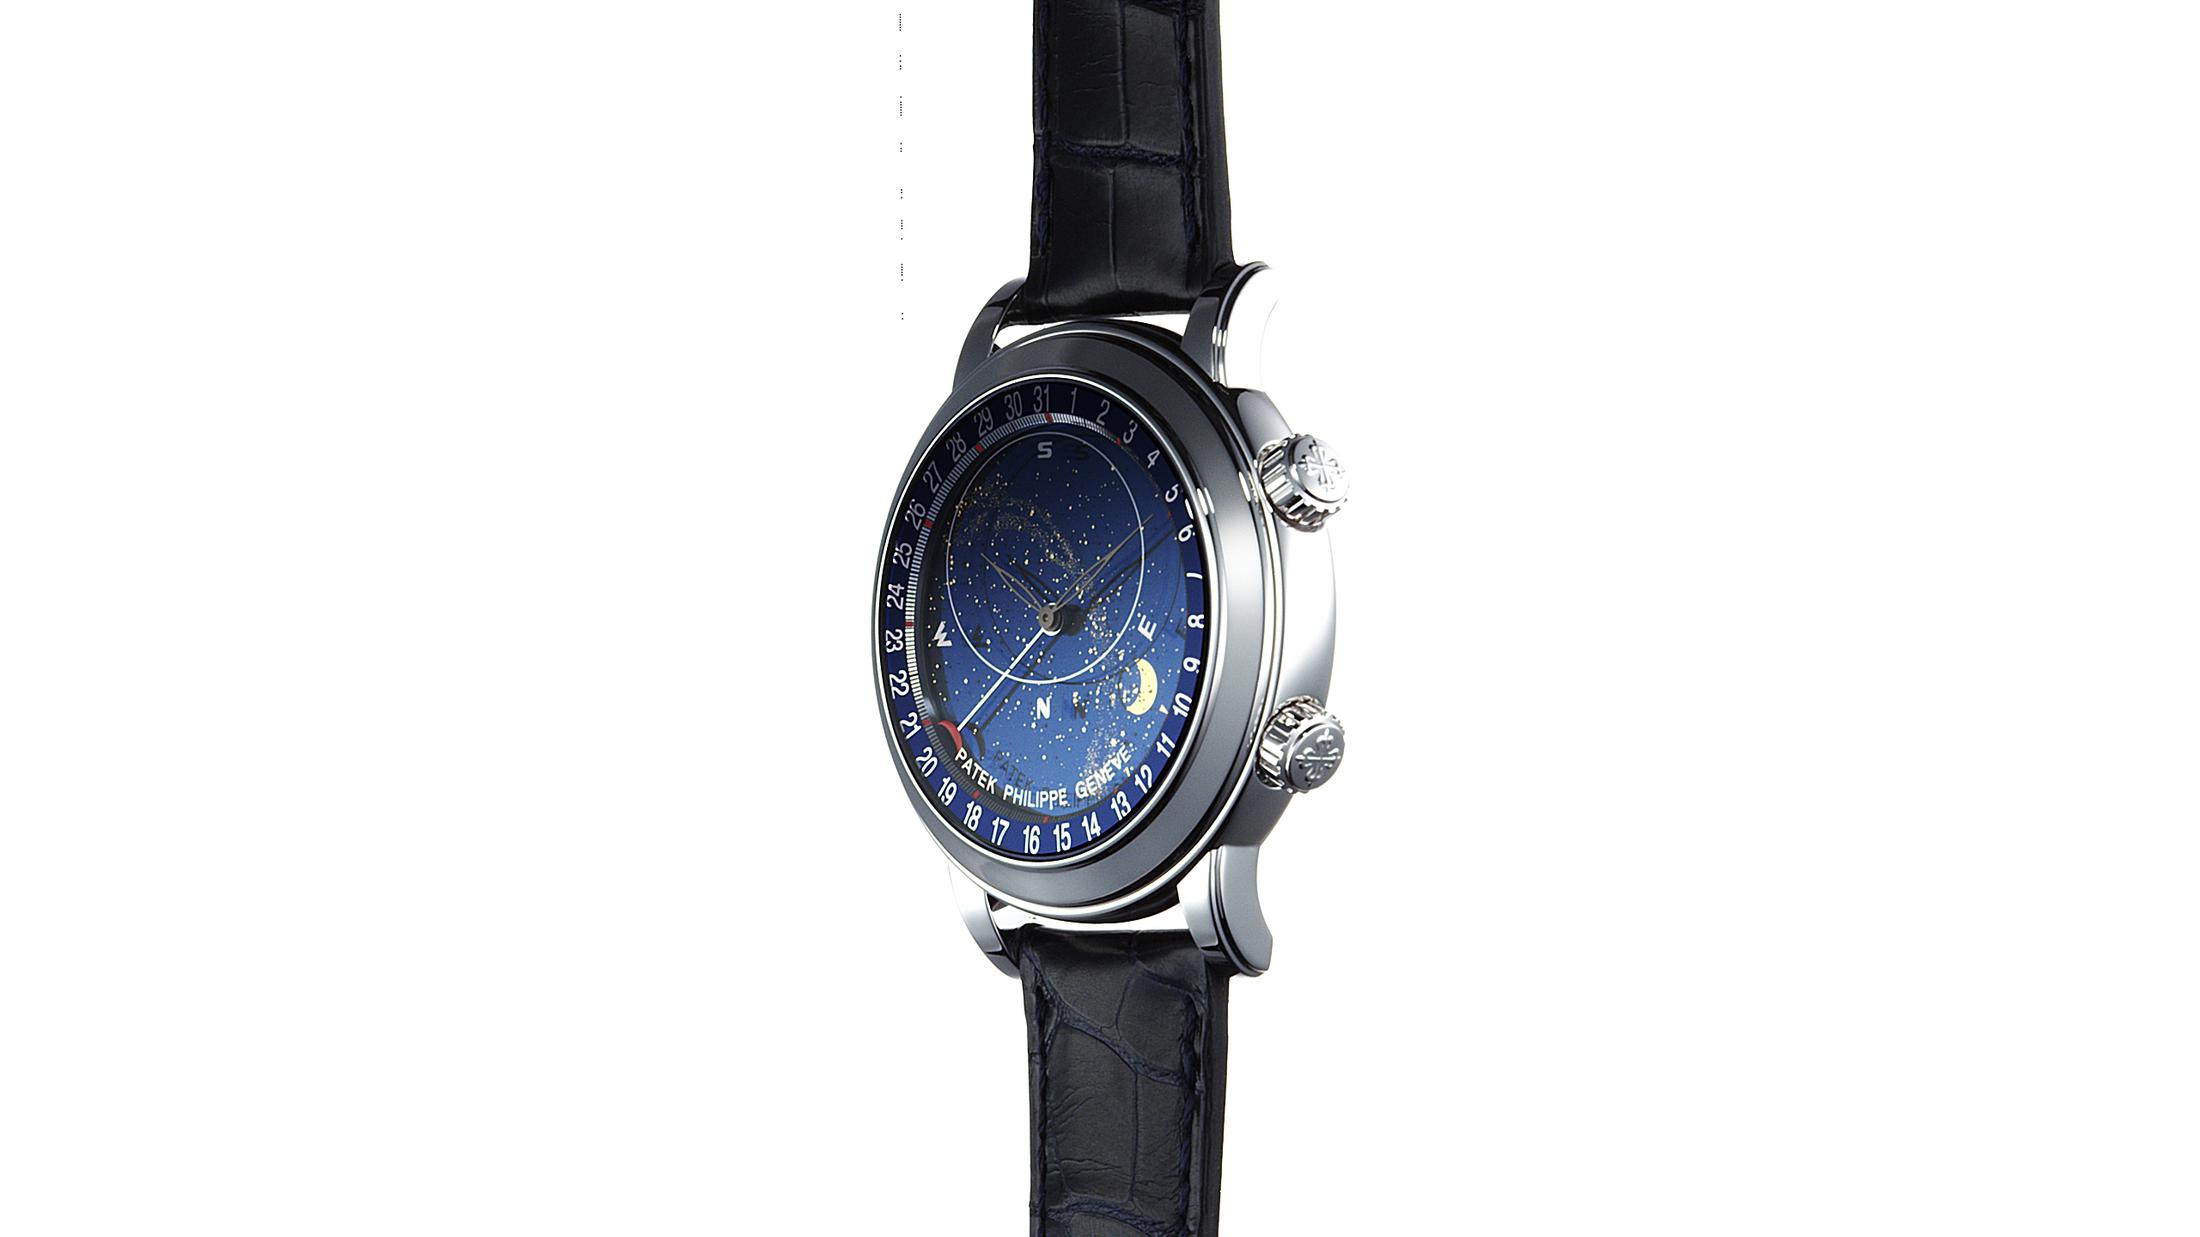 Patek Philippe Calatrava 1461 18k 33mm watchPatek Philippe Aquanaut 5164A-001 Stainless Steel 40mm watch